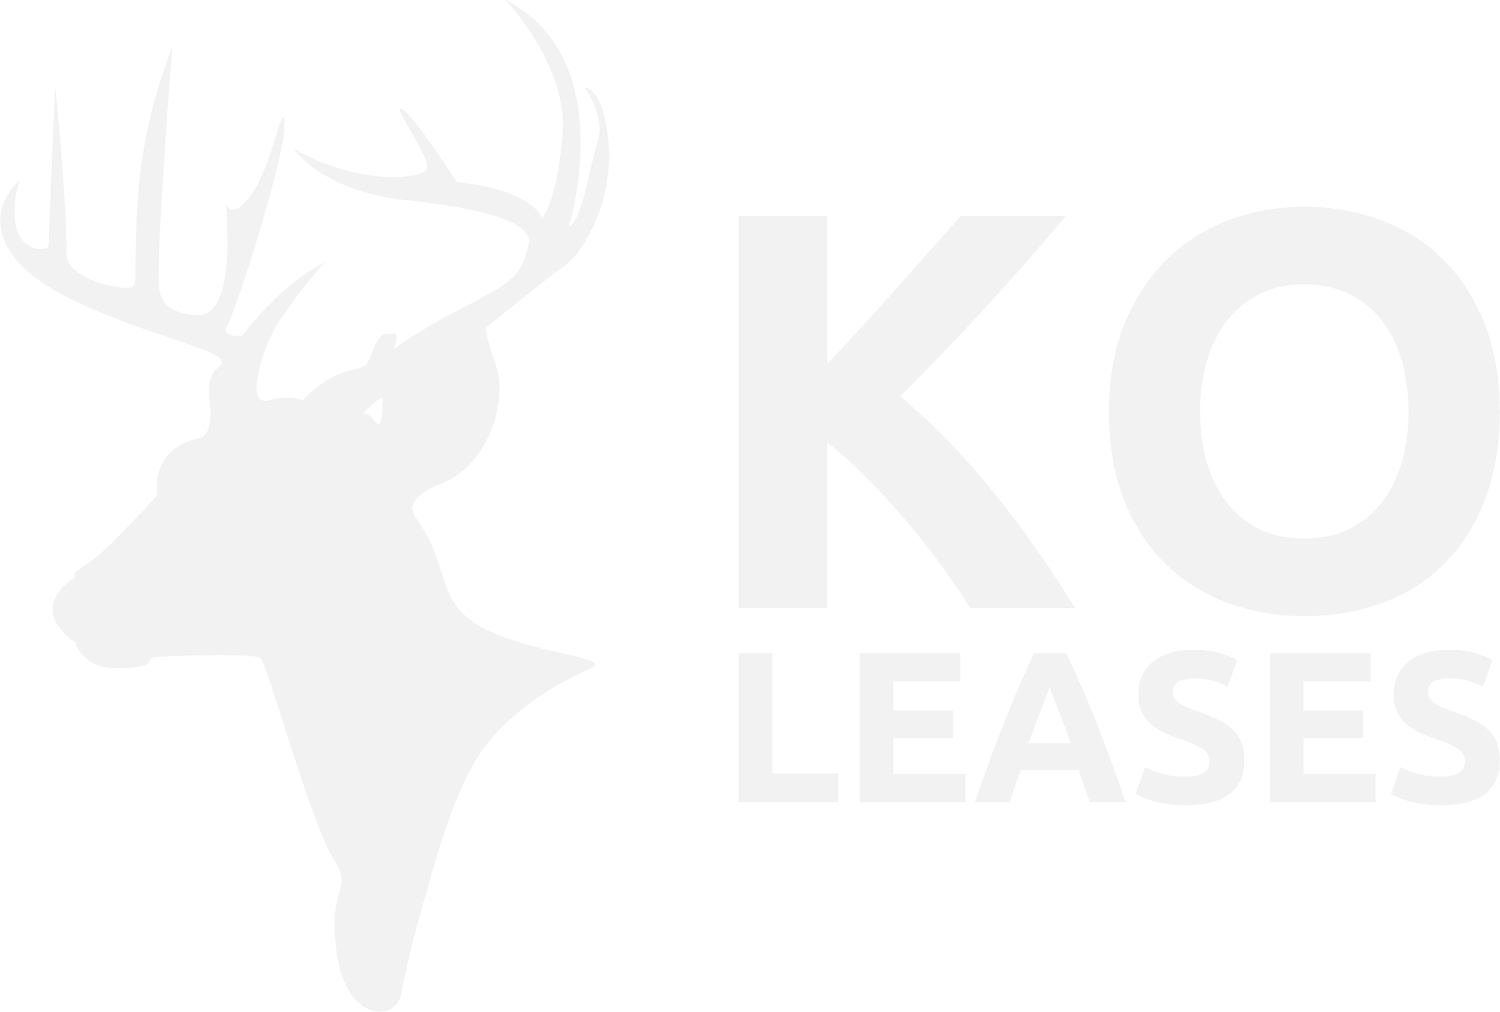 KO Leases